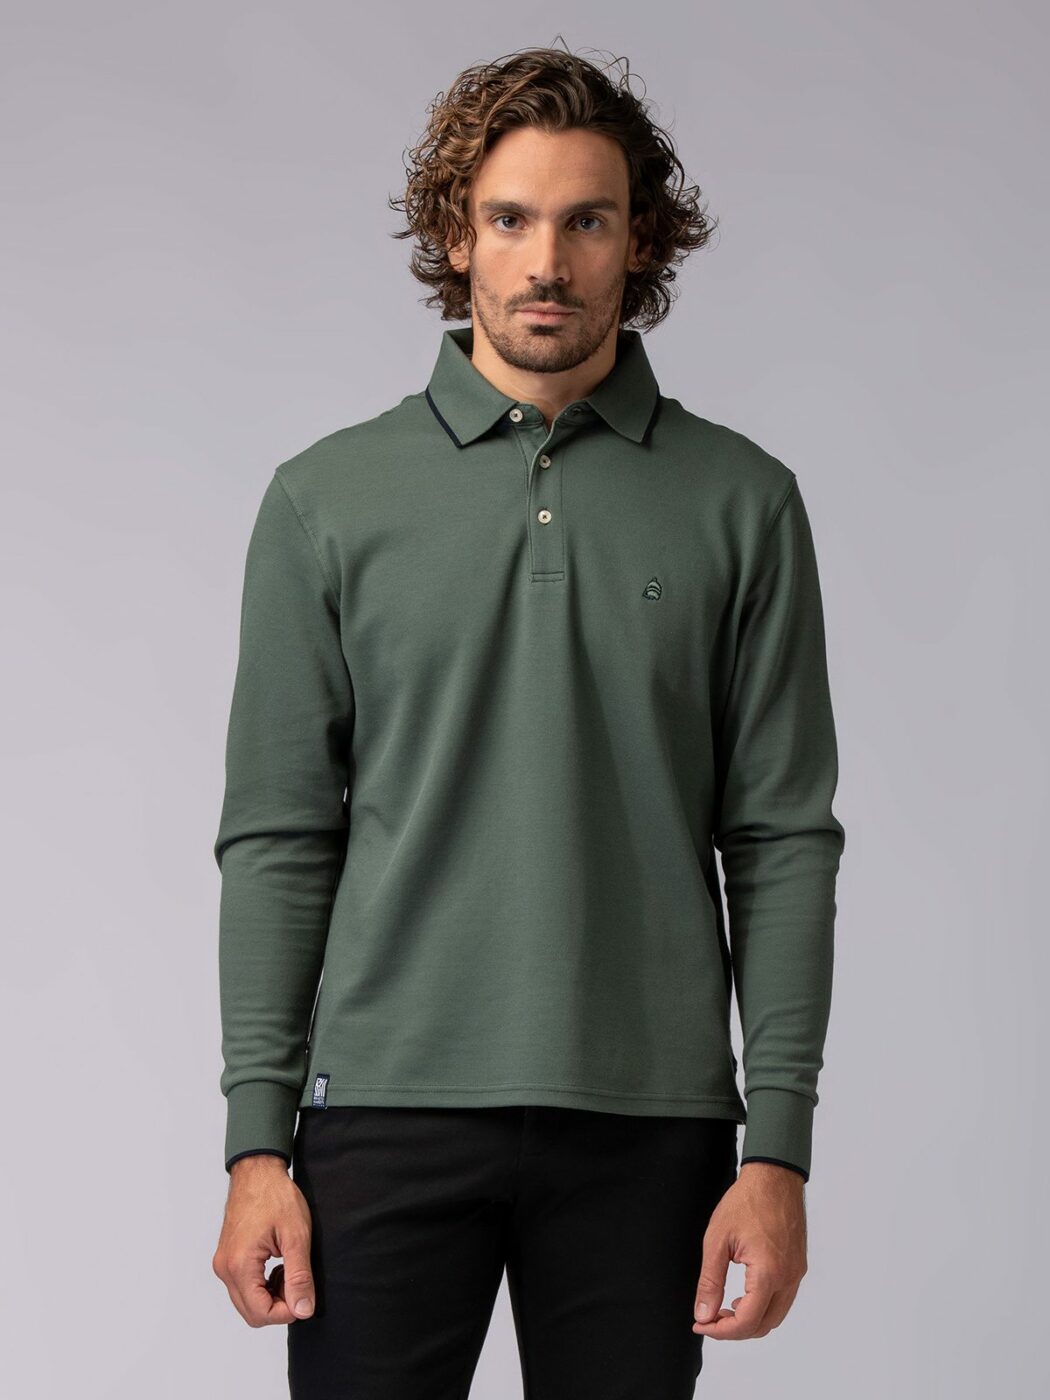 BENETO MARETTI Men's Polo Blouse - Menzies Clothing Online Store